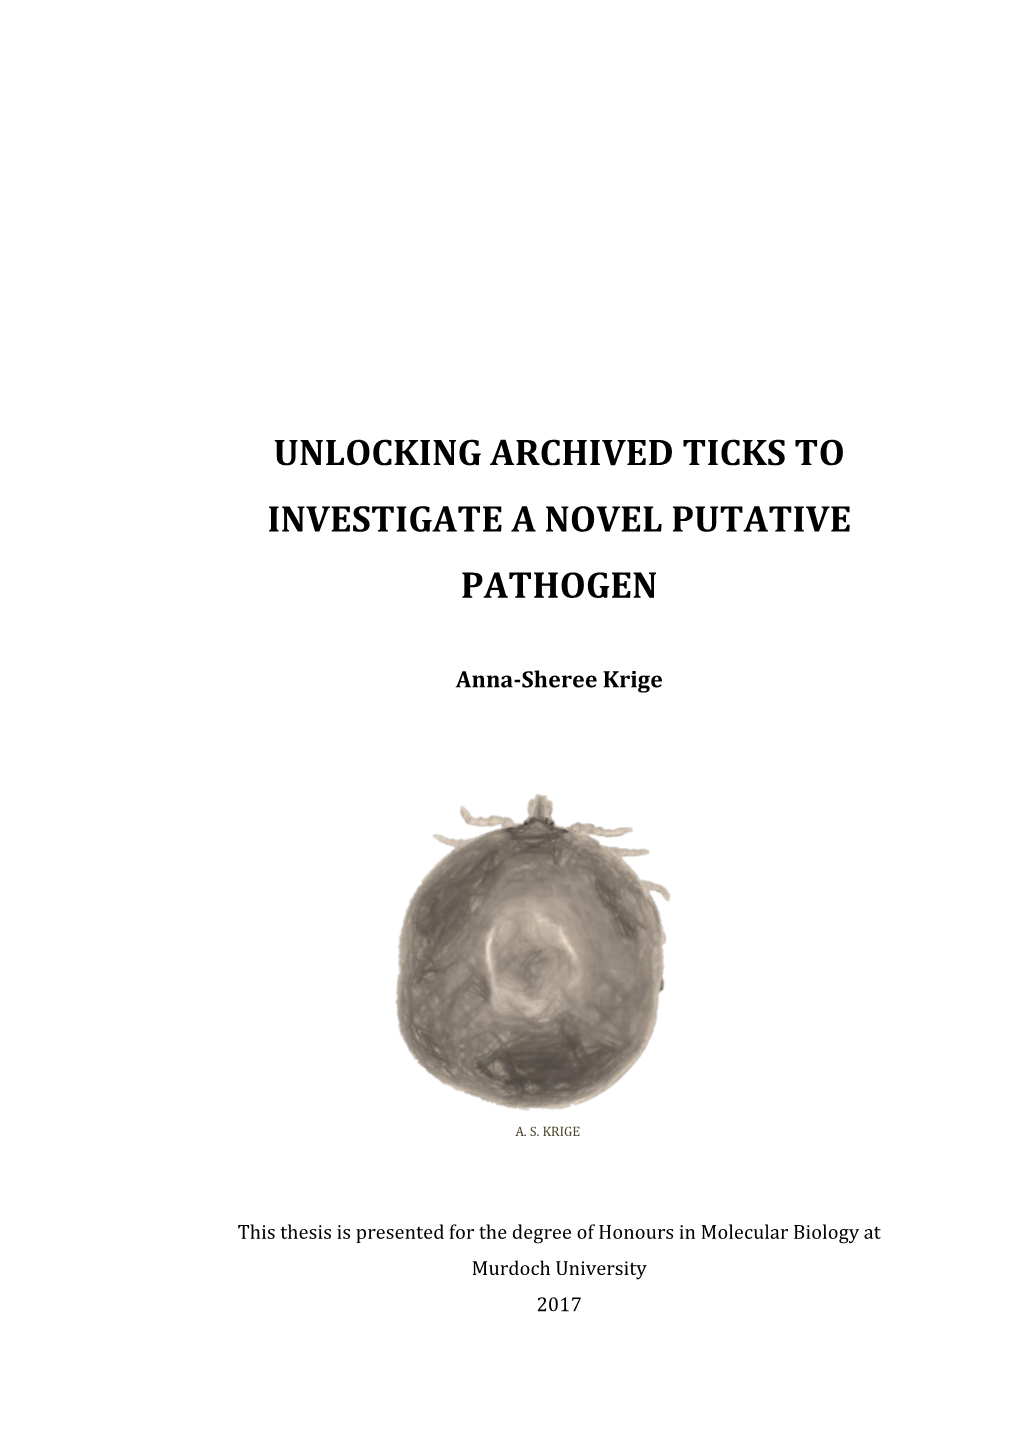 Unlocking Archived Ticks to Investigate a Novel Putative Pathogen